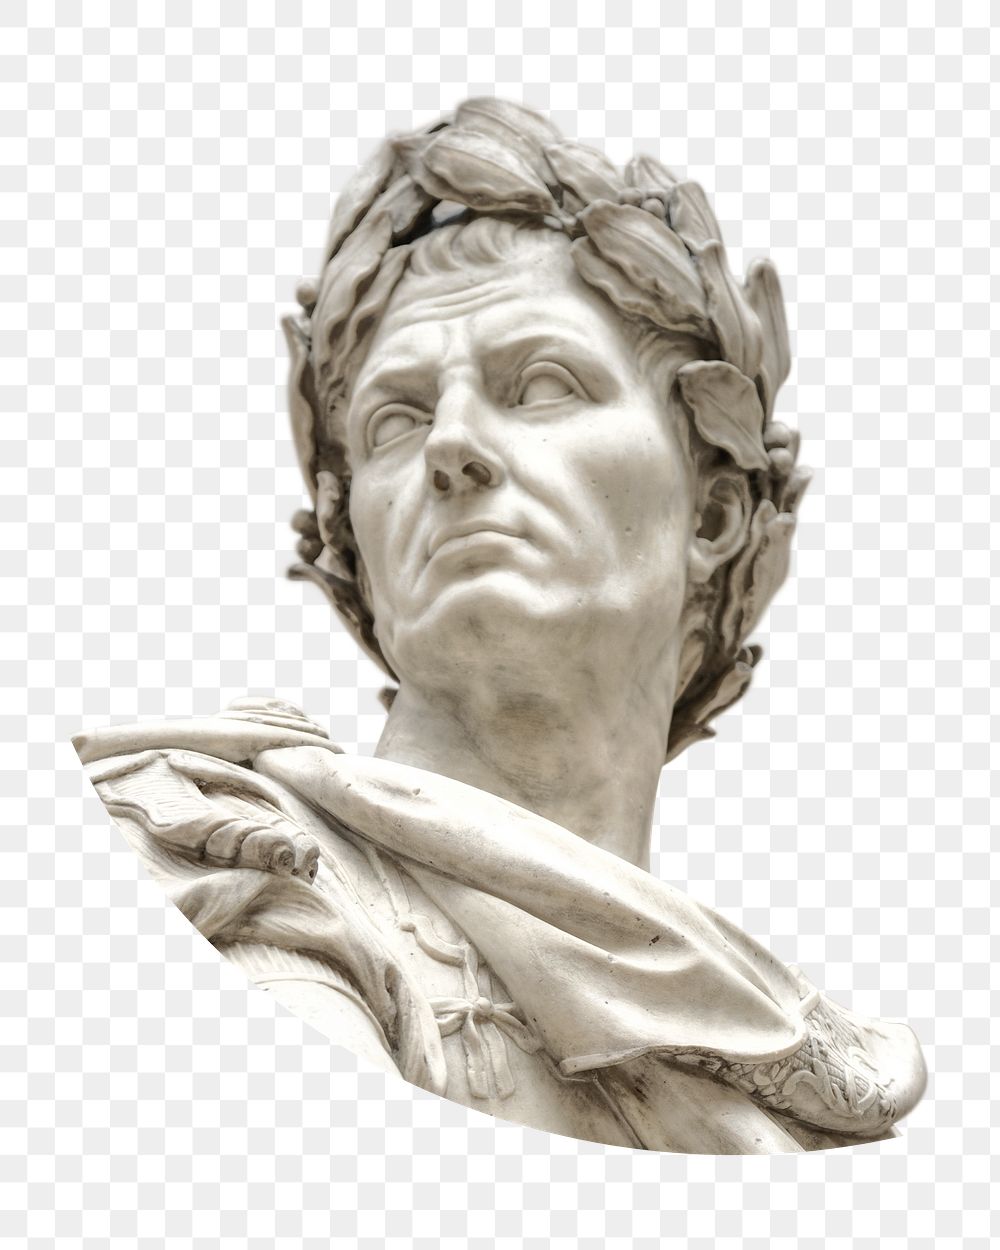 Julius Caesar statue png sticker, transparent background